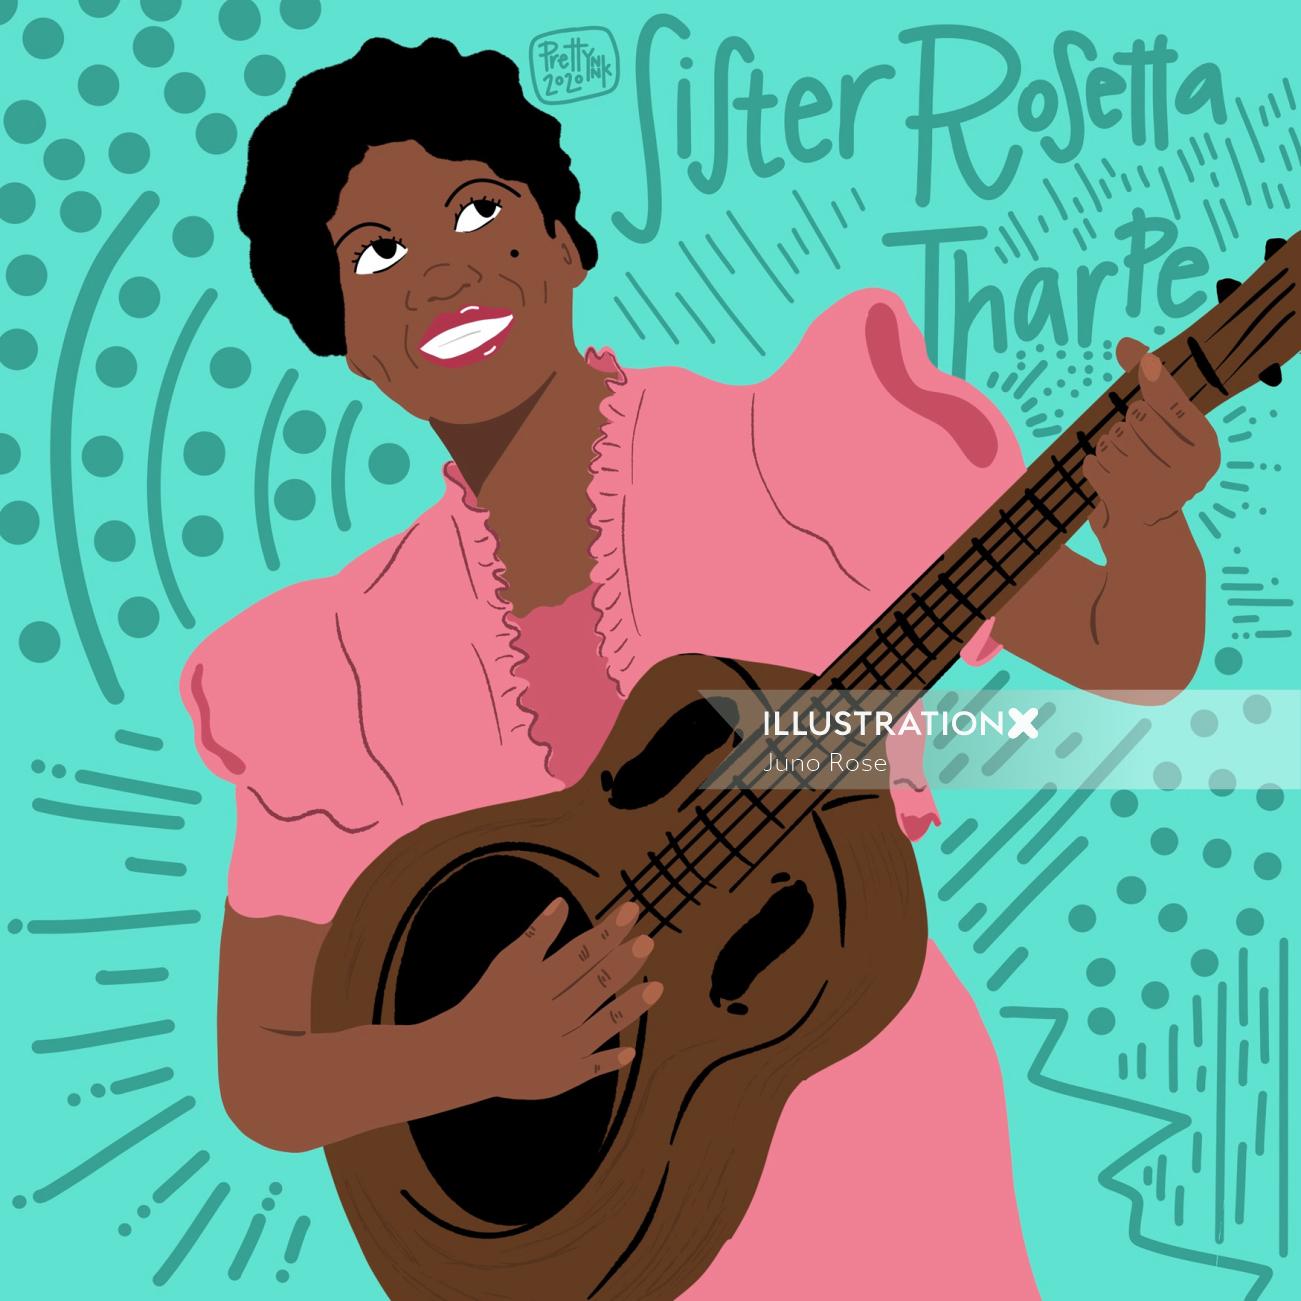 Sister Rosetta Tharpe, an American vocalist, in a portrait